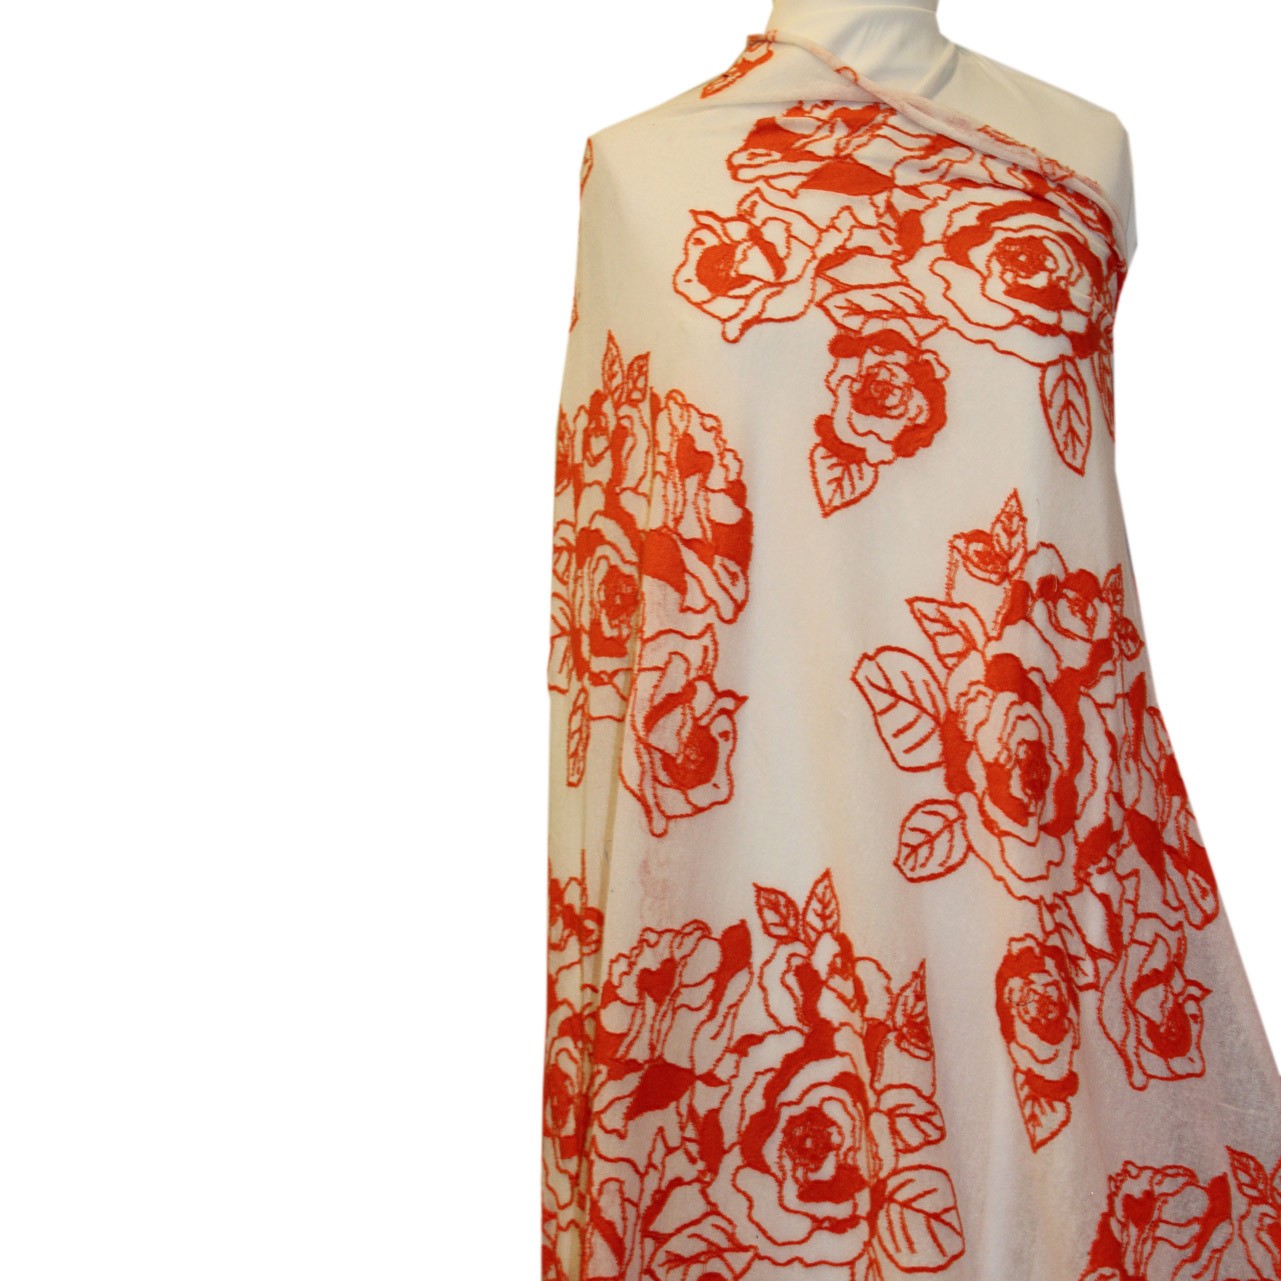 Floral Novelty Knit - Orange/White